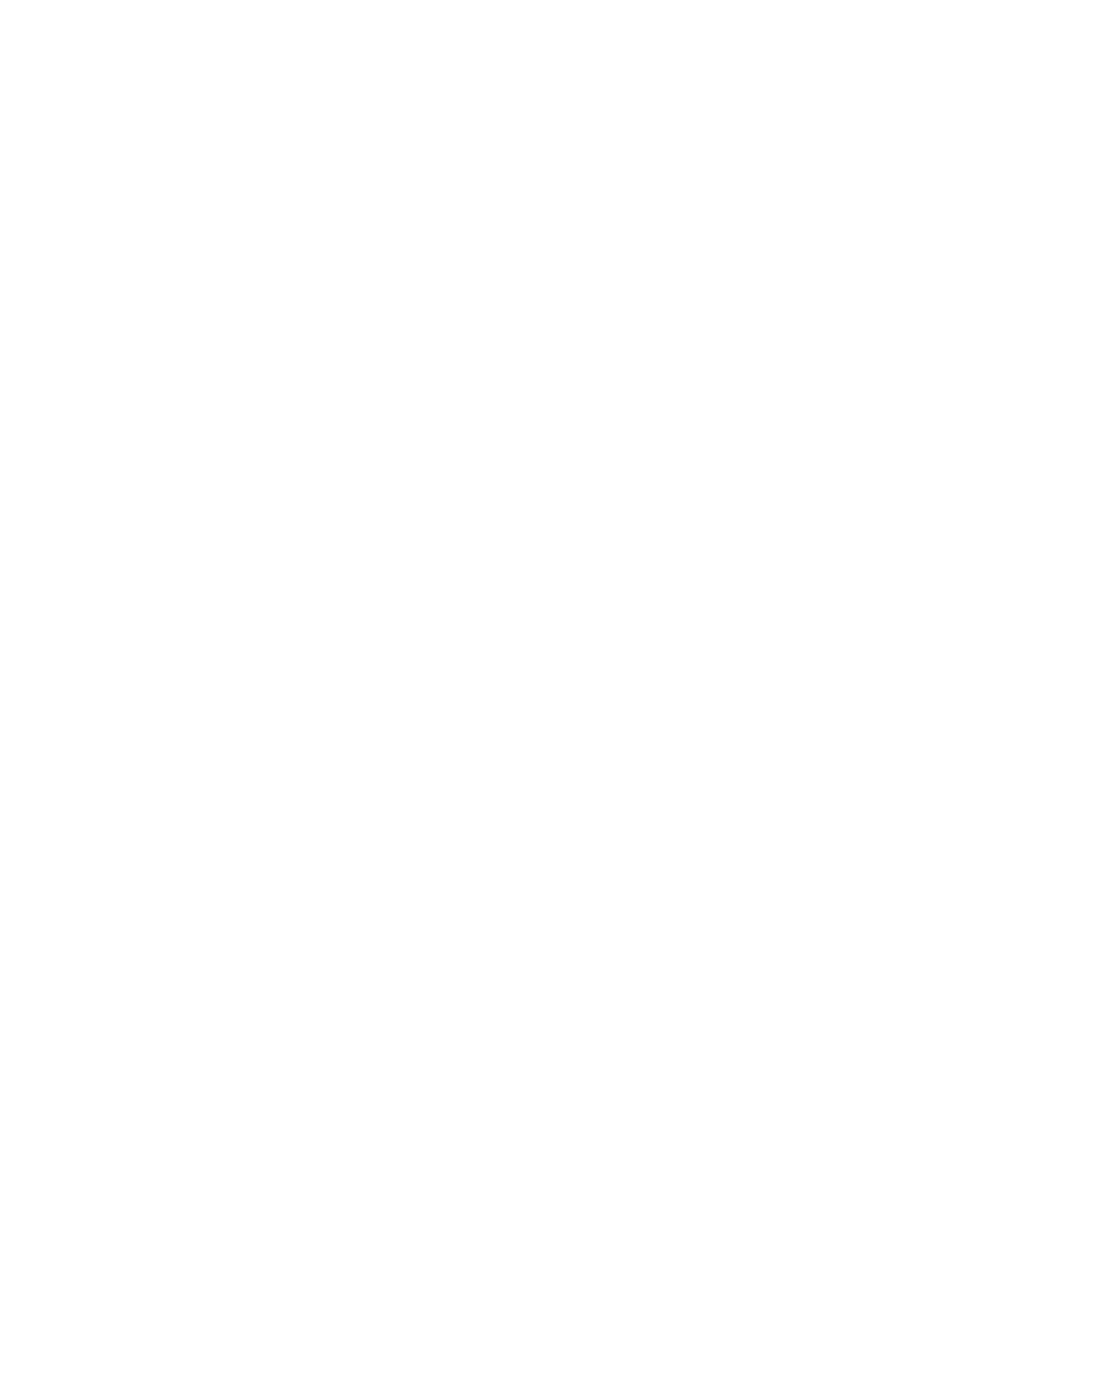 Green Key image